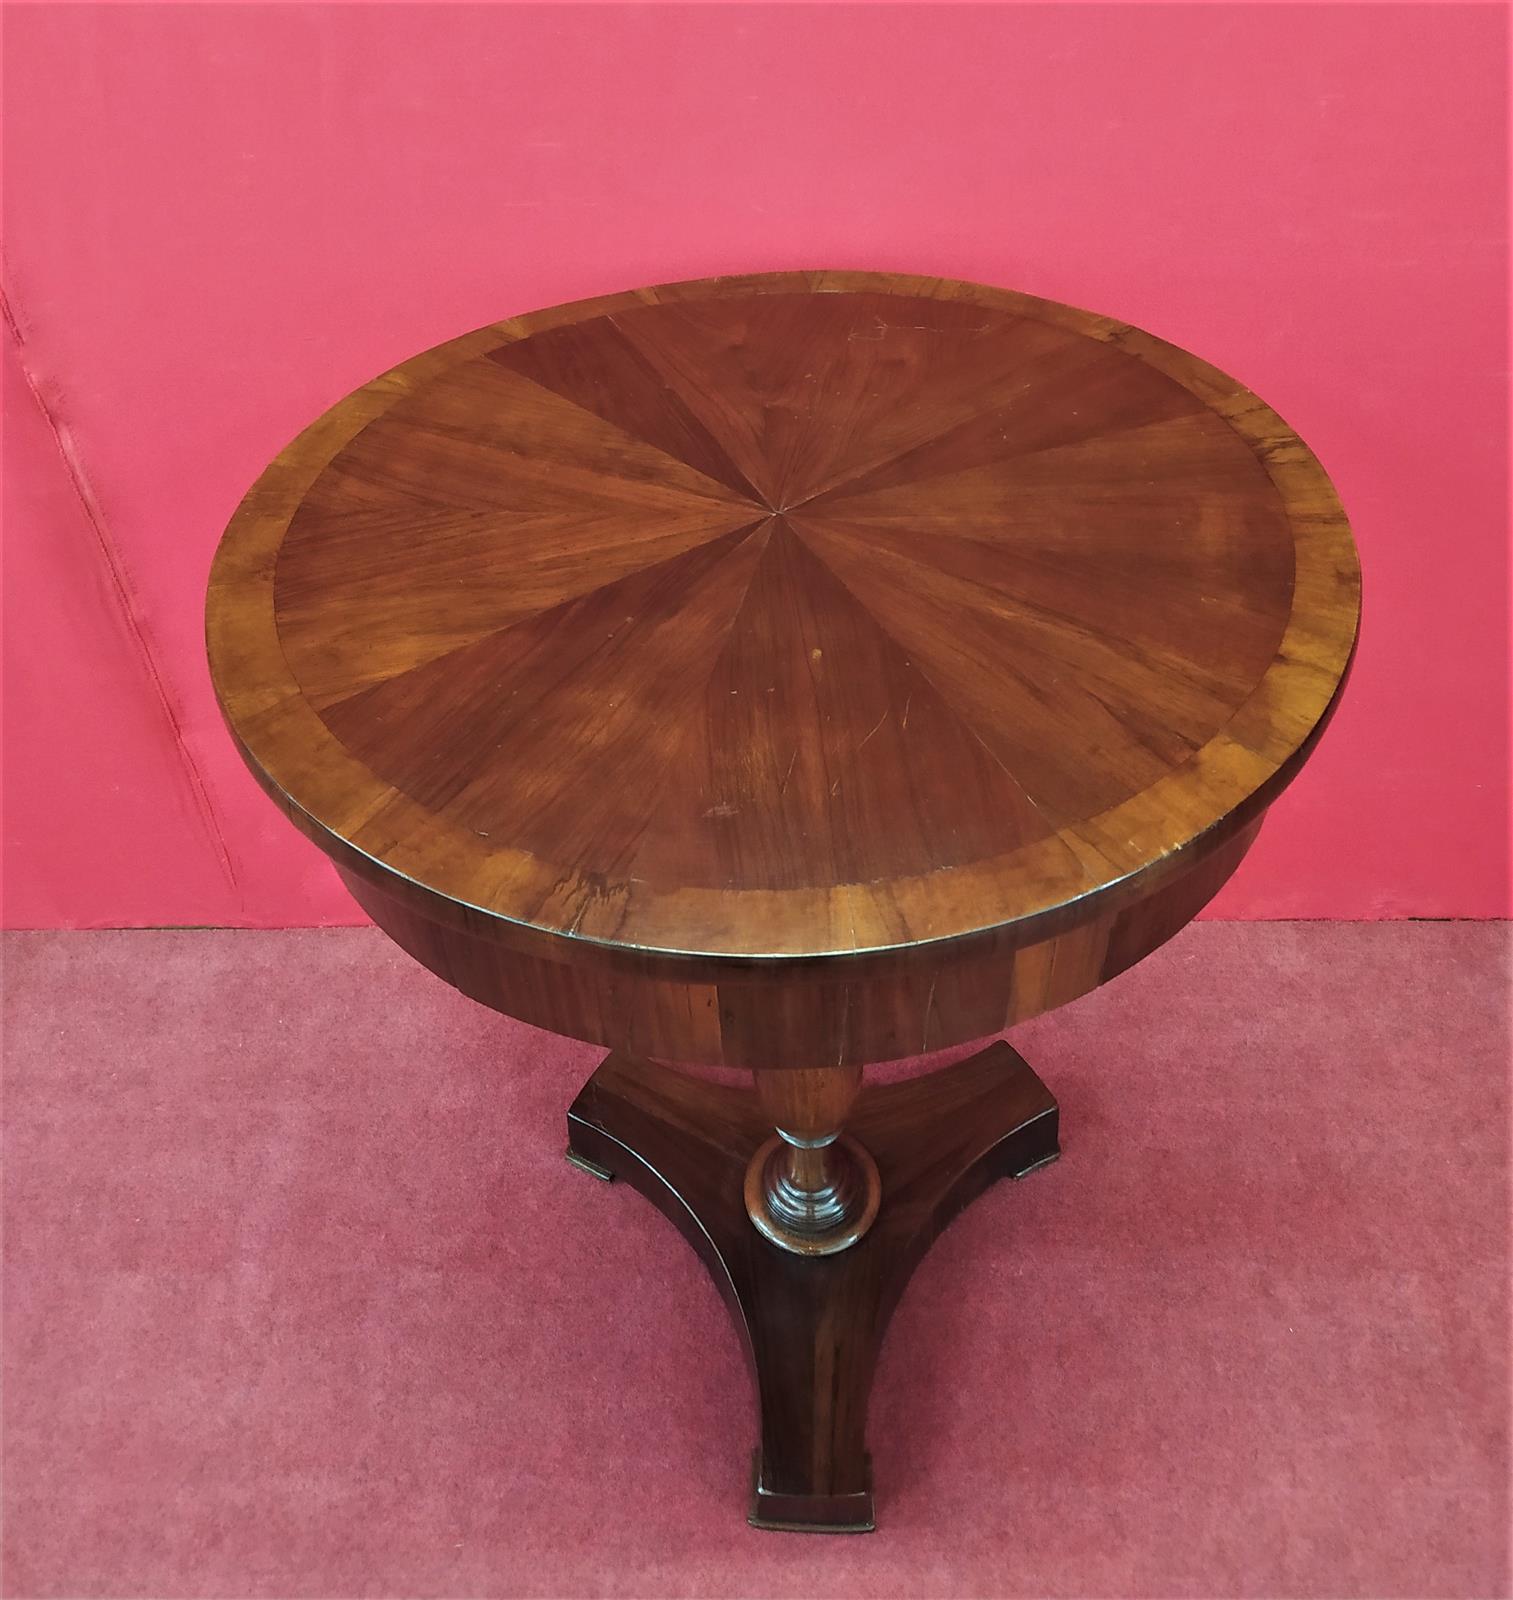 Empire round coffee table